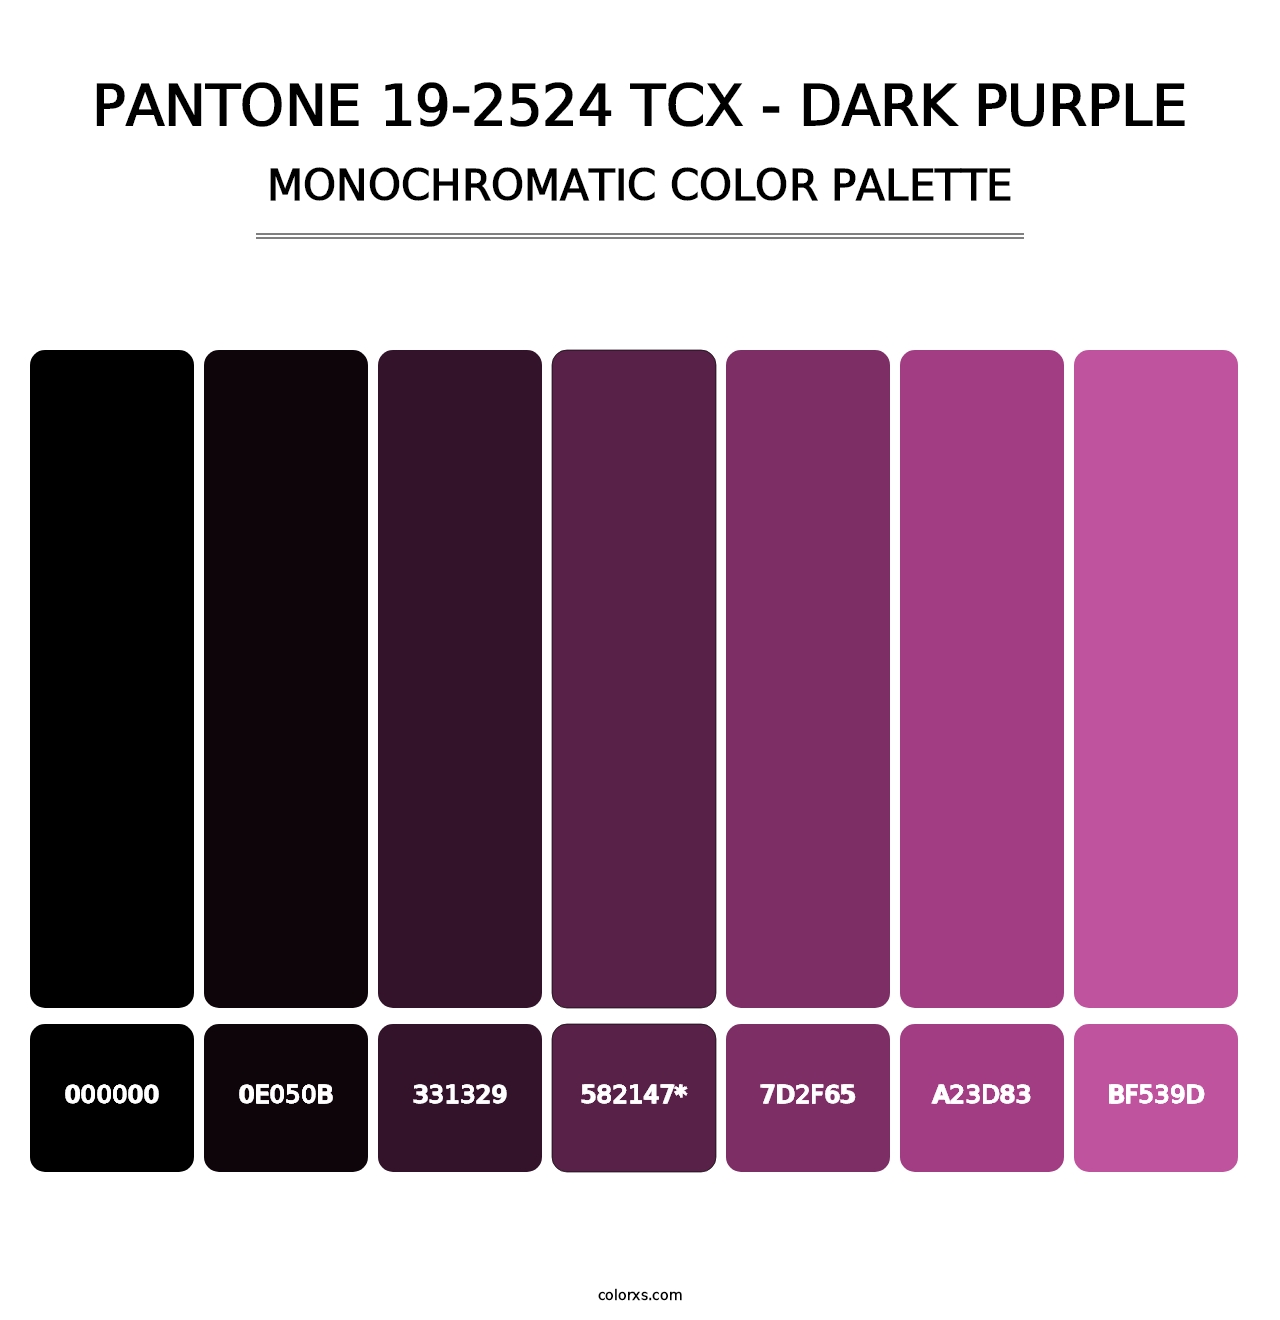 PANTONE 19-2524 TCX - Dark Purple - Monochromatic Color Palette